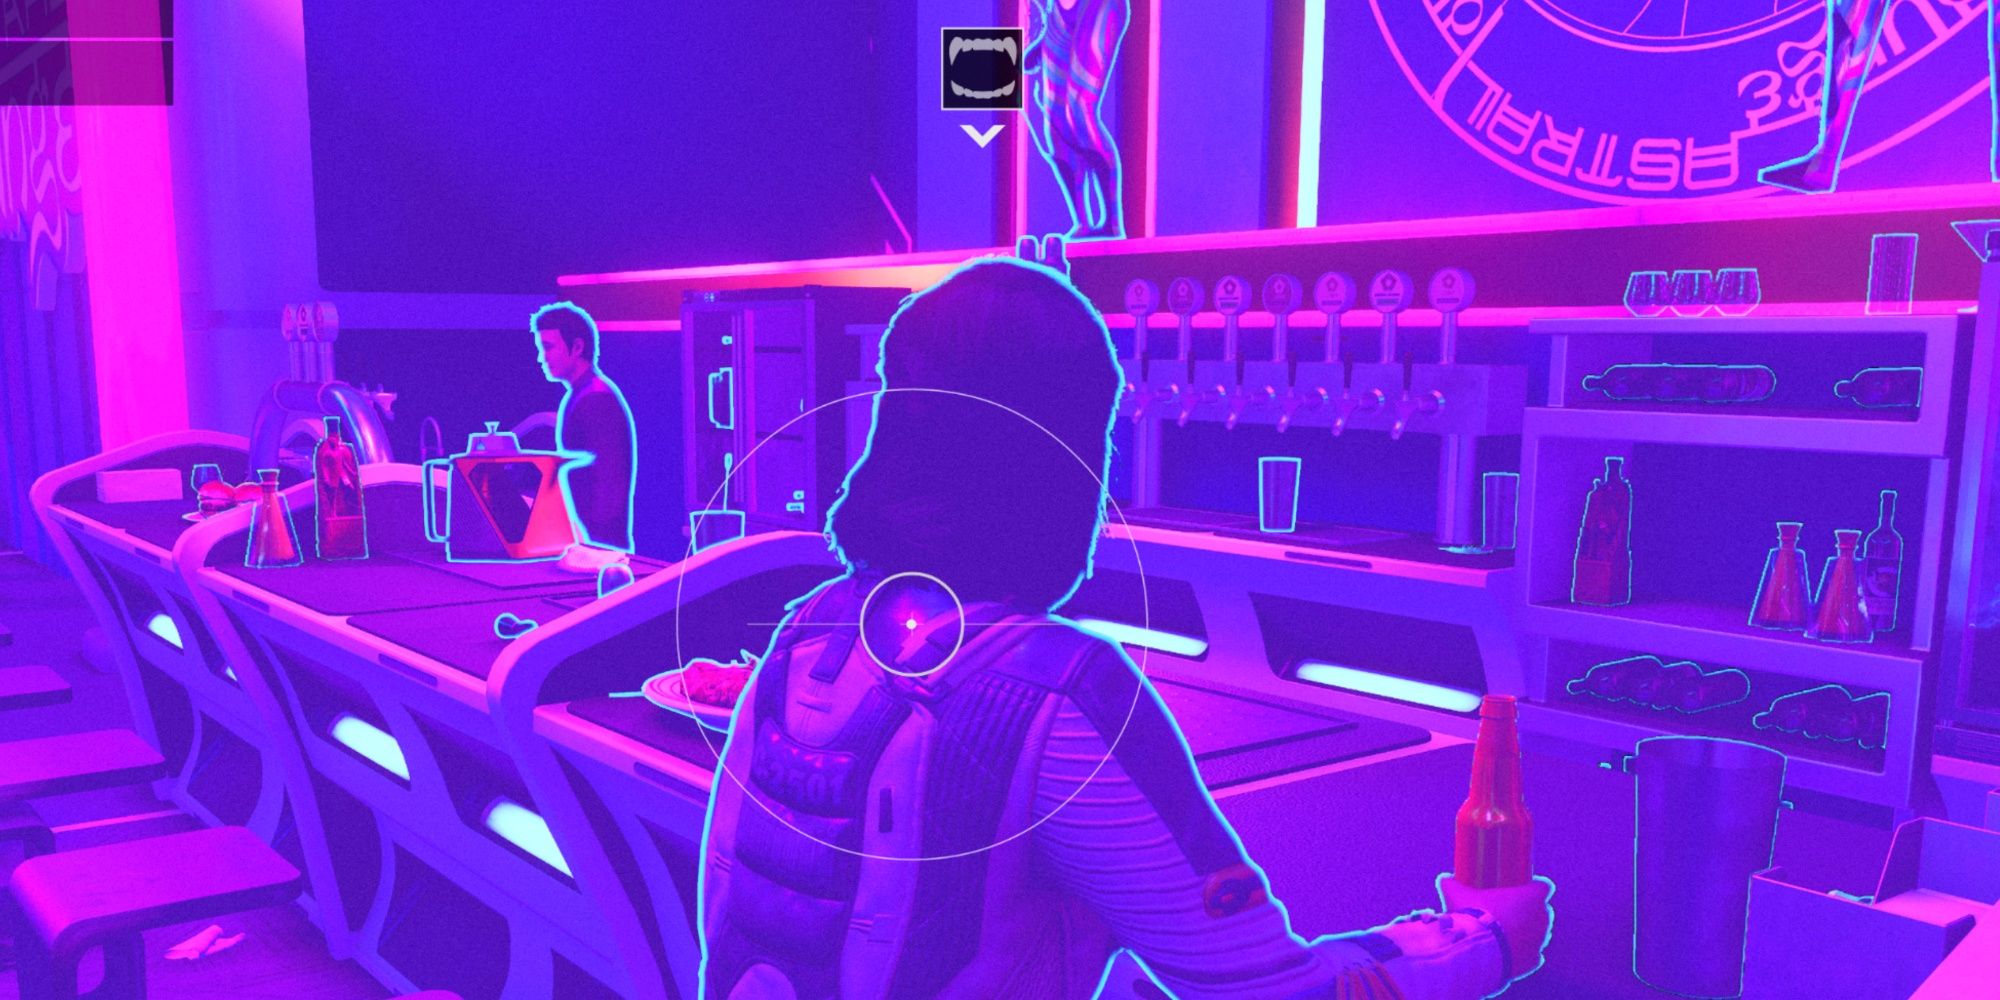 intimidating an npc in a neon bar